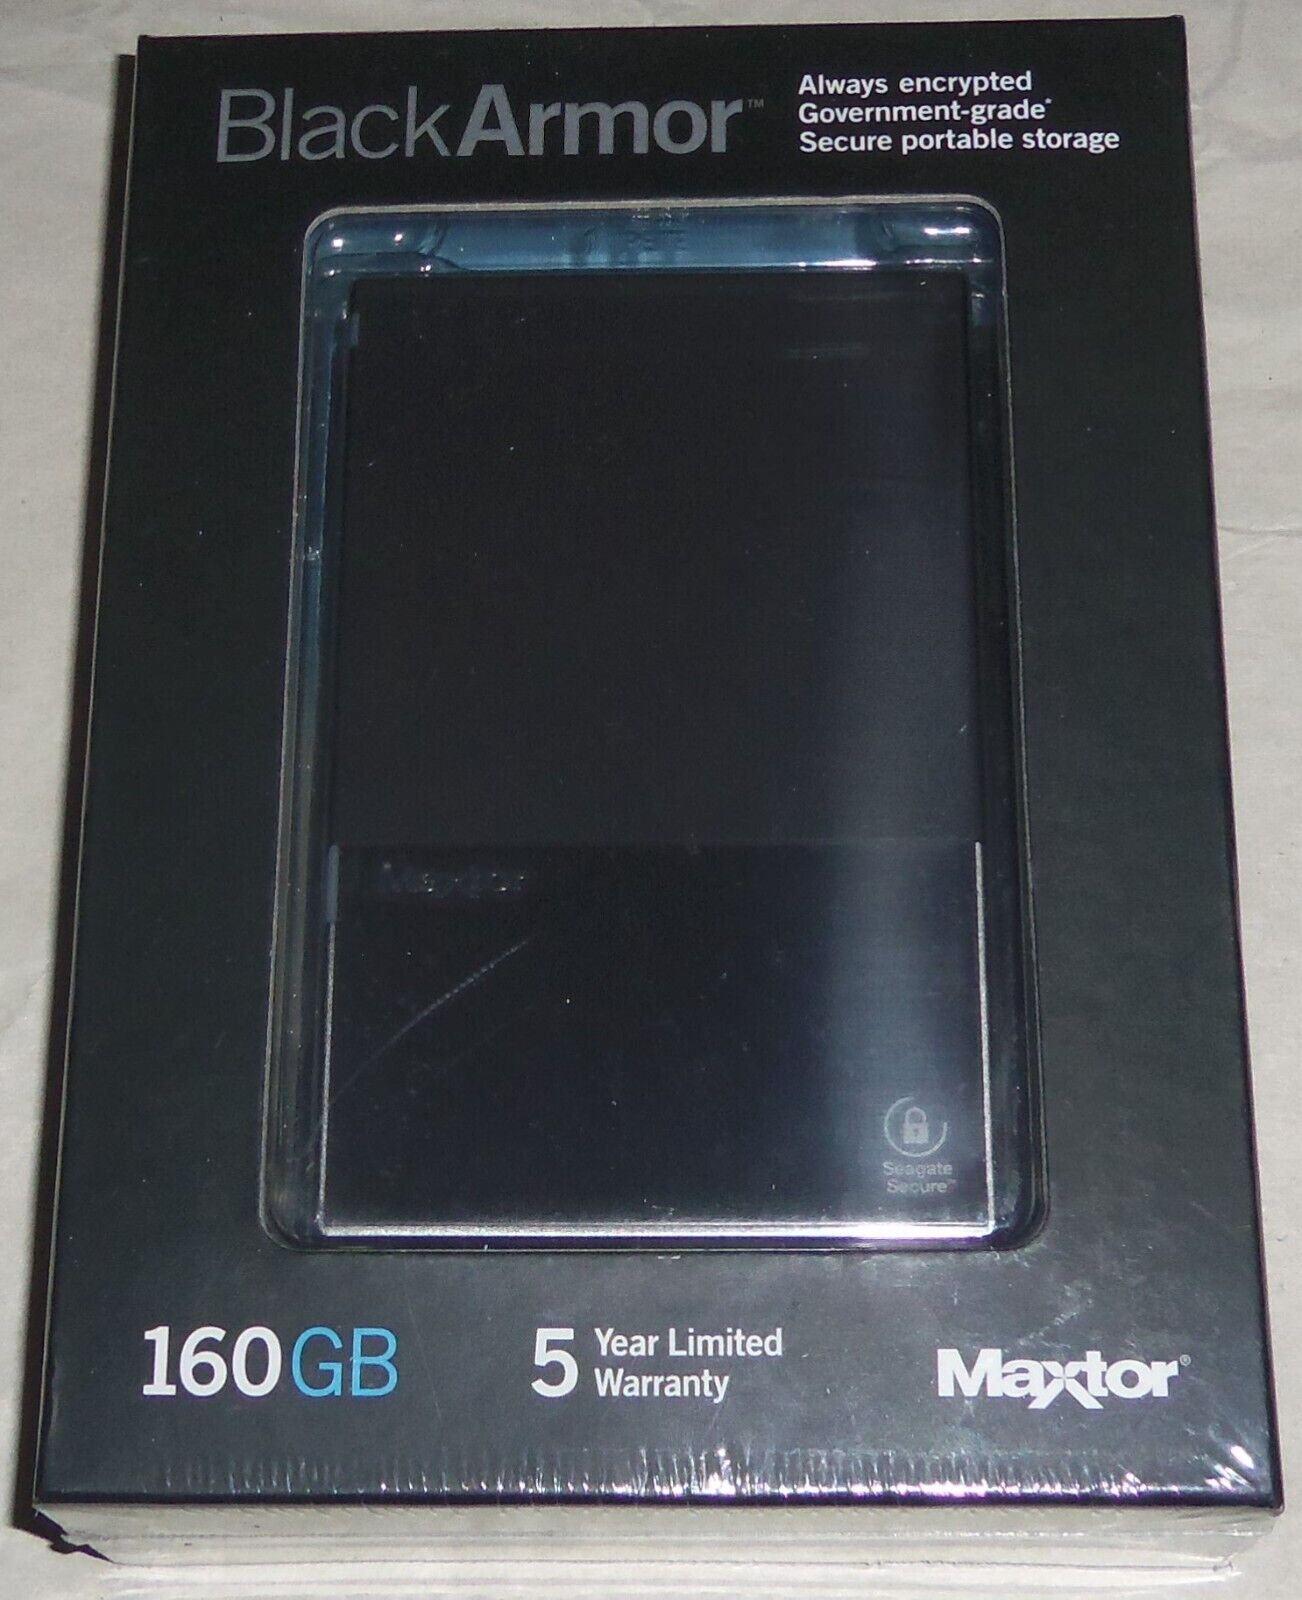 Maxtor BlackArmor USB 2.0 External Hard Drive 160GB | 9GZ2A2-590 | Encryption